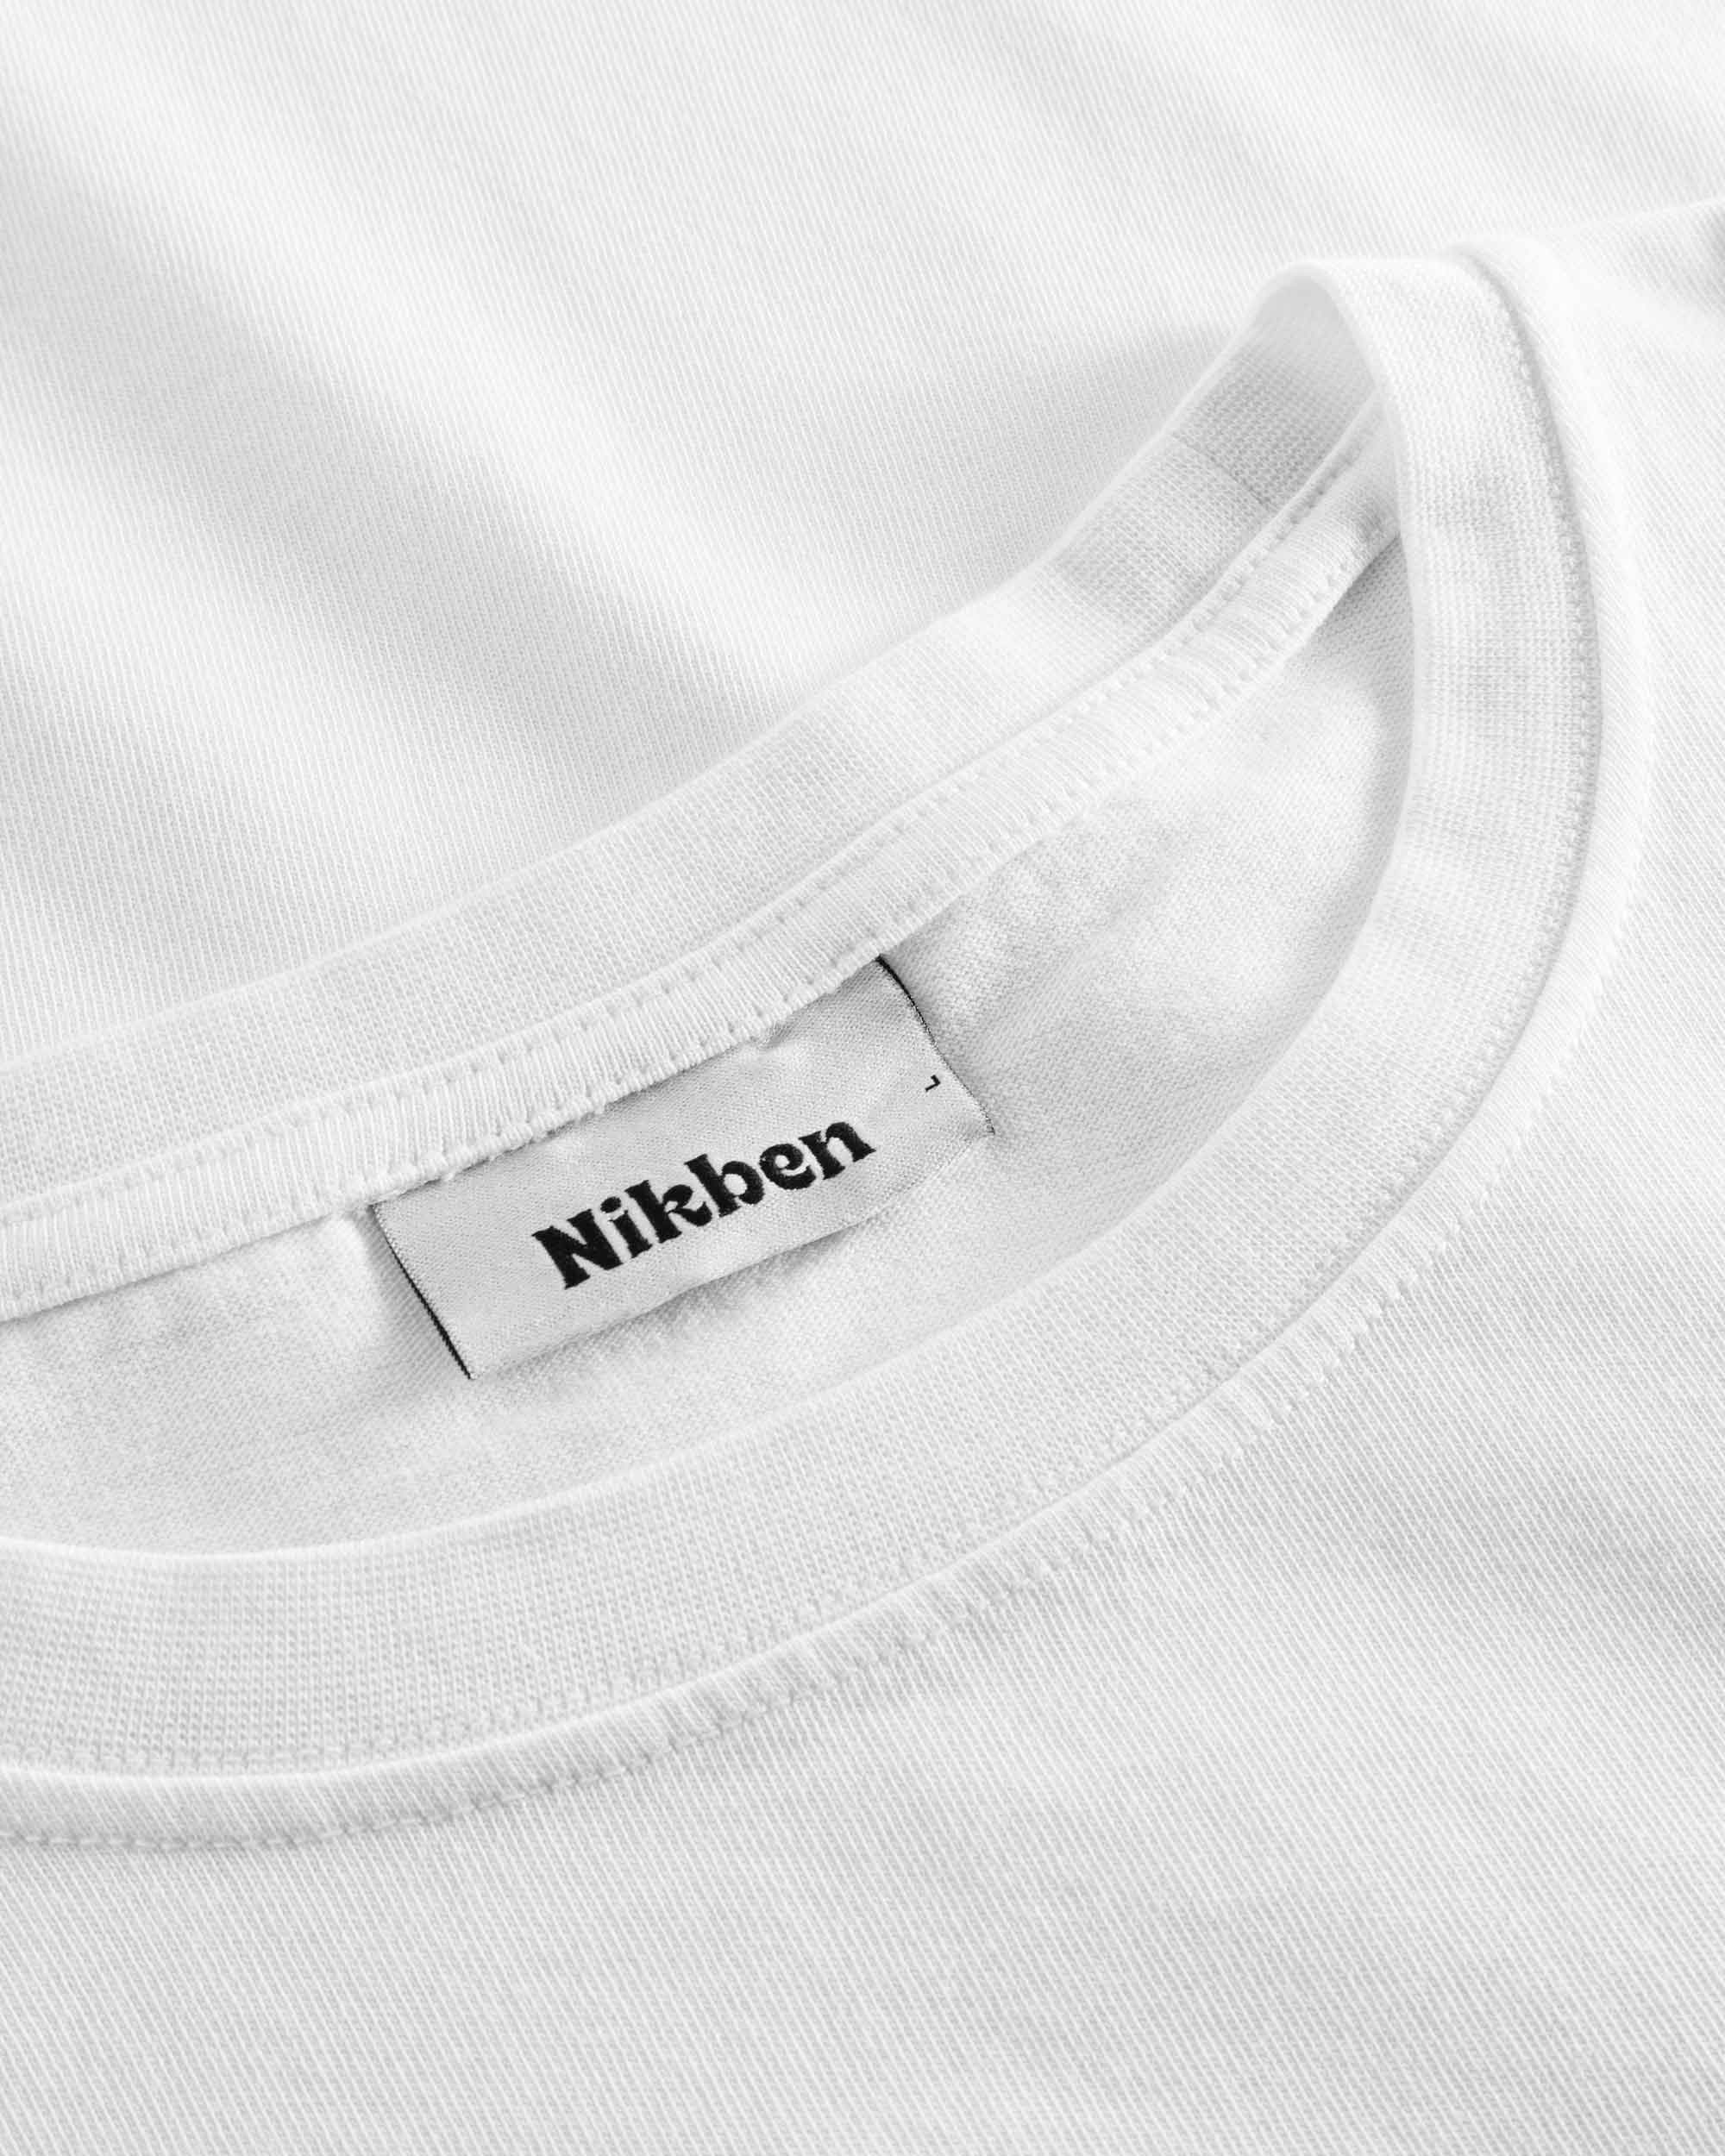 Close-up of round neck and stitching on white T-shirt